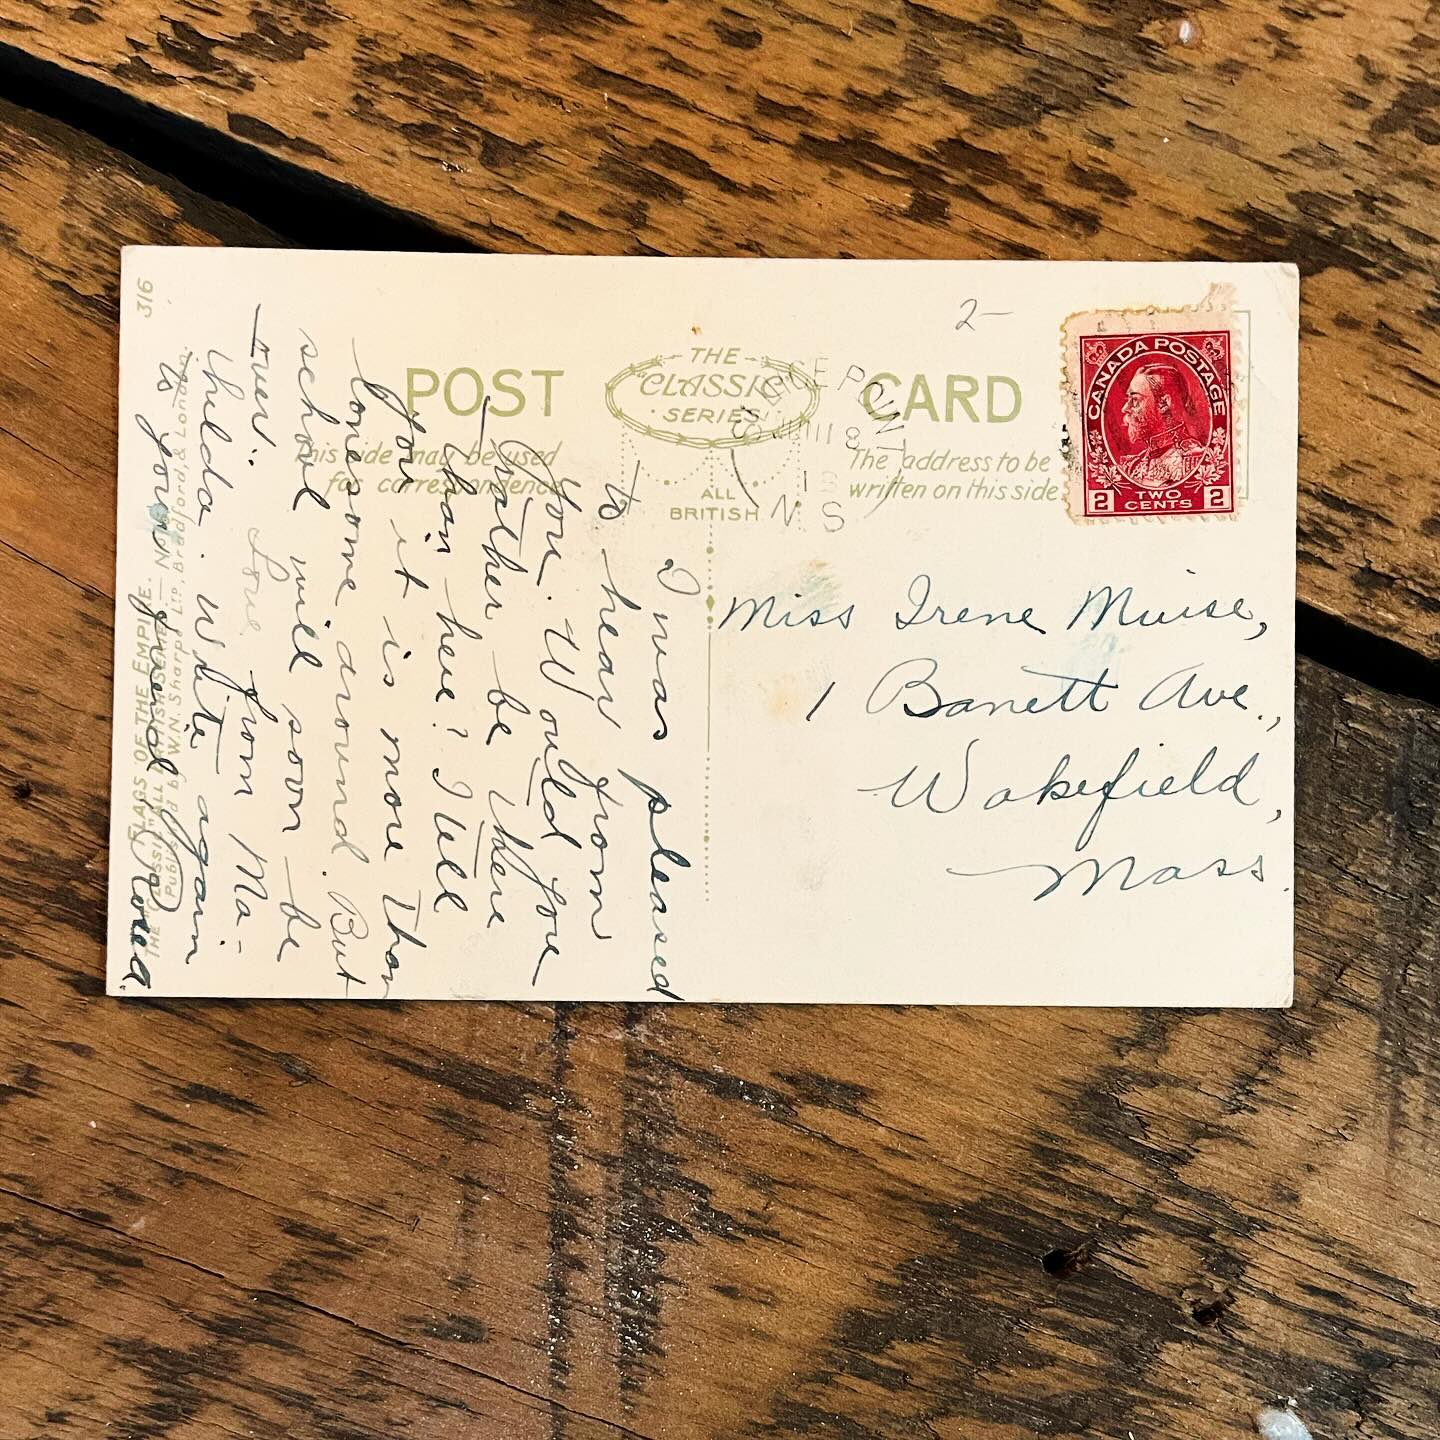 Vintage Bravo Canada postcard